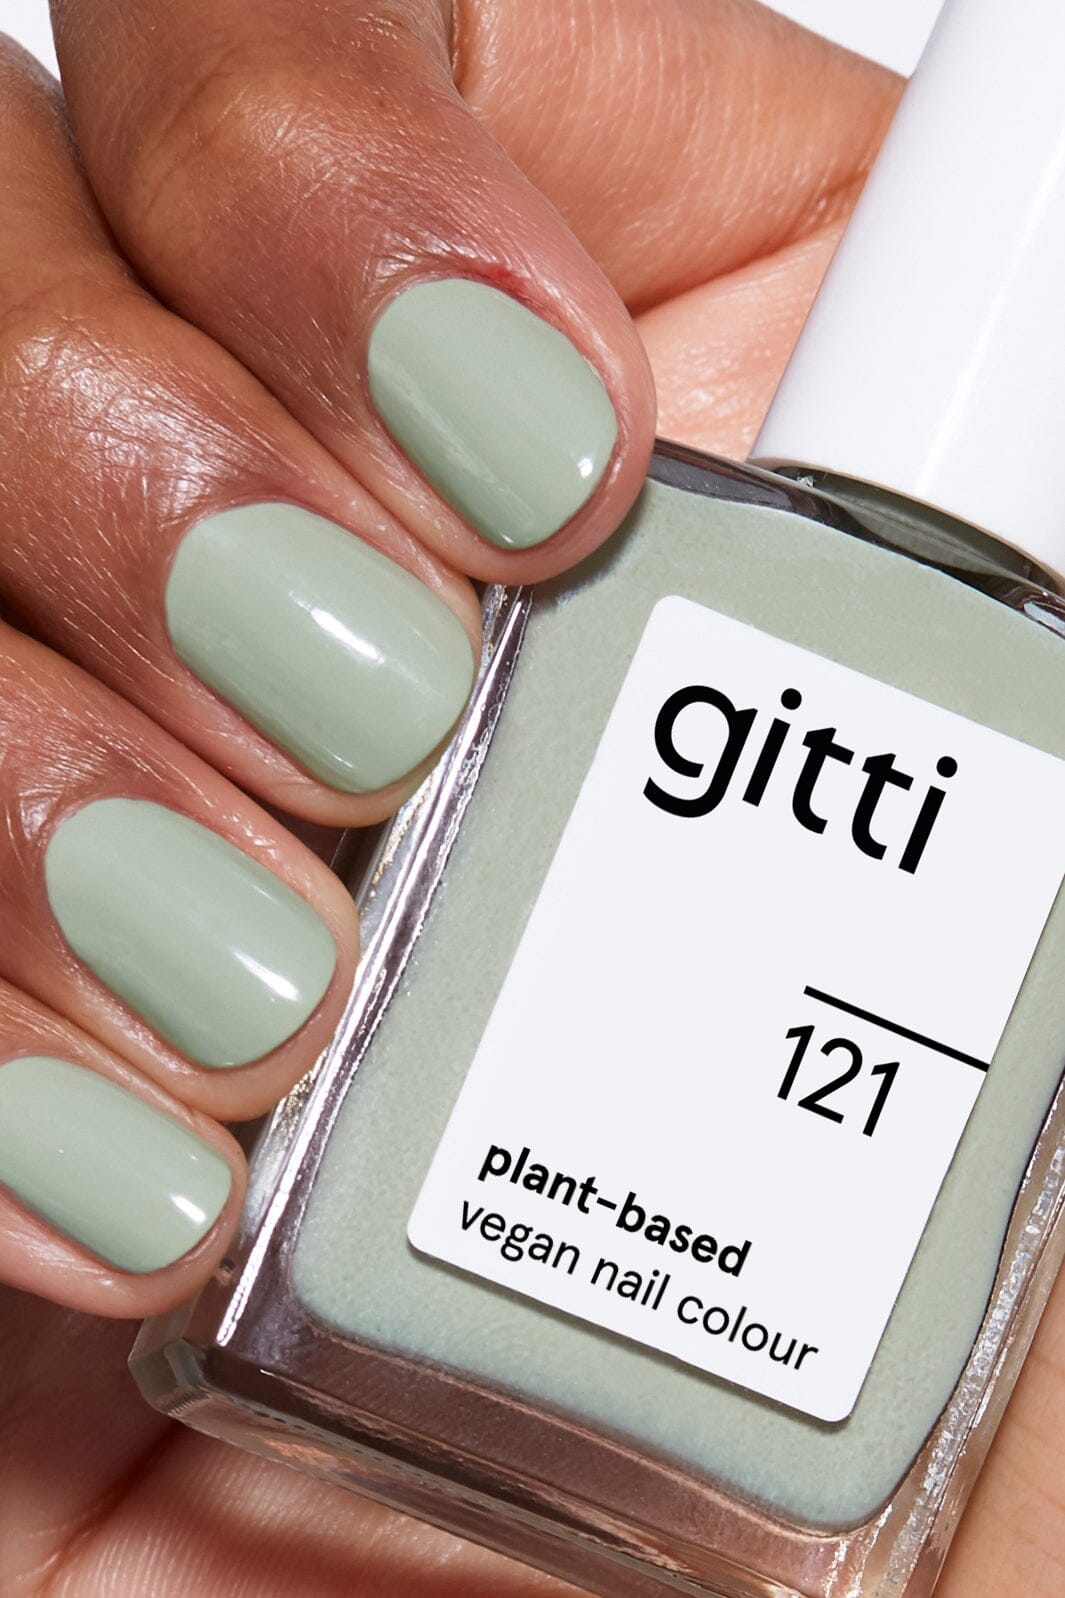 Gitti - Nail Polish 121 - Sage Green Neglelak 